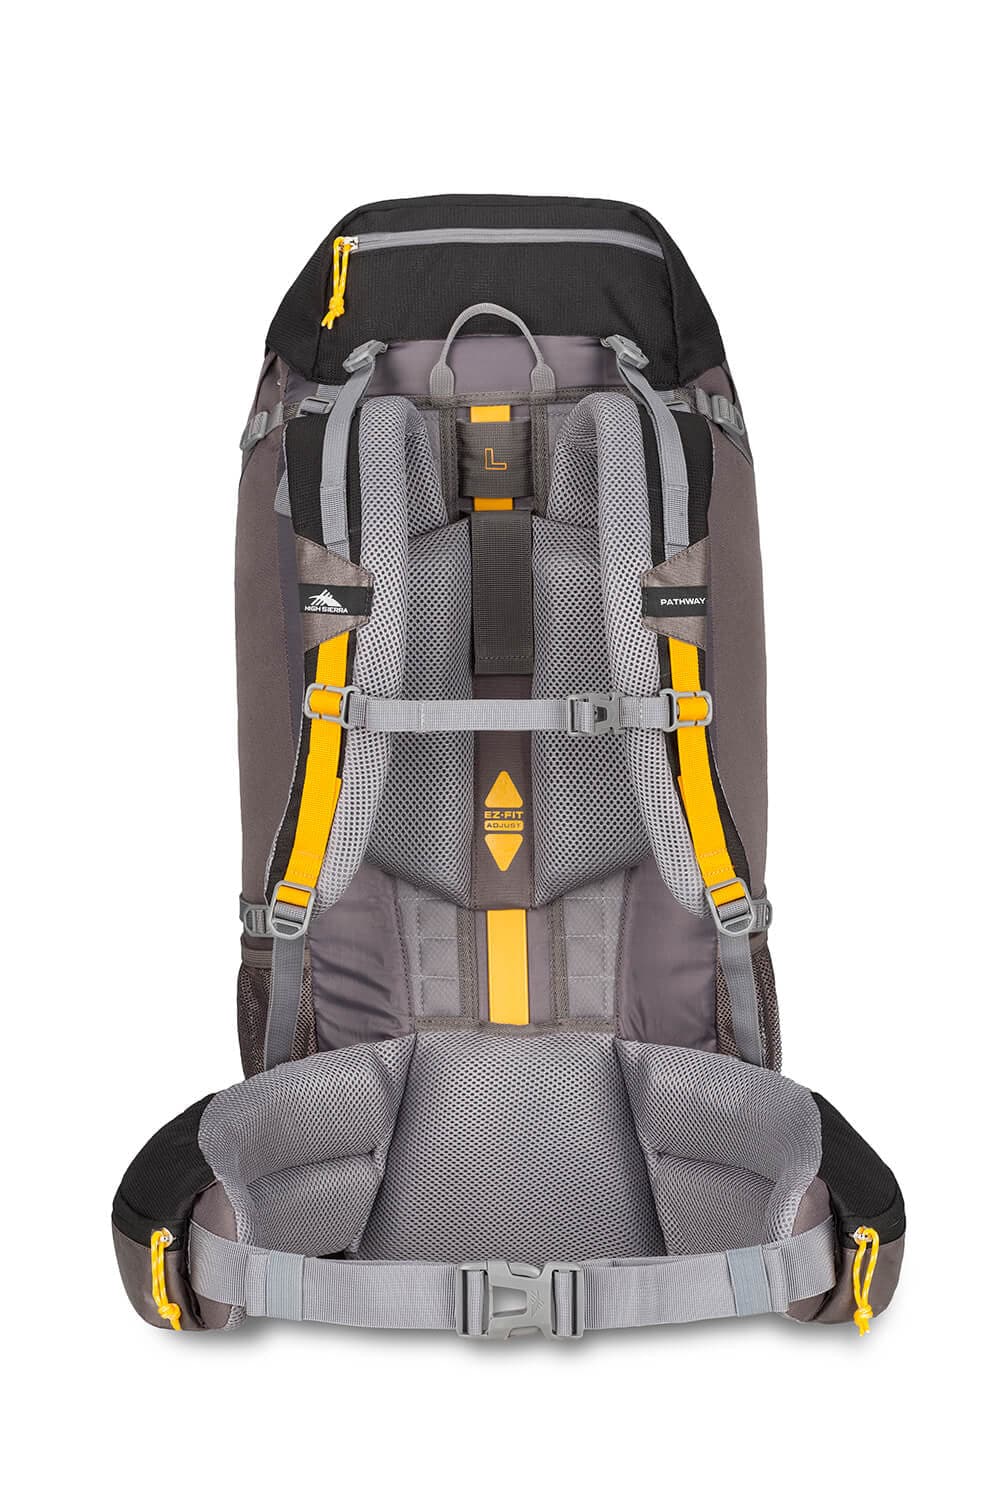 High Sierra Pathway Frame Packs 60L Backpack